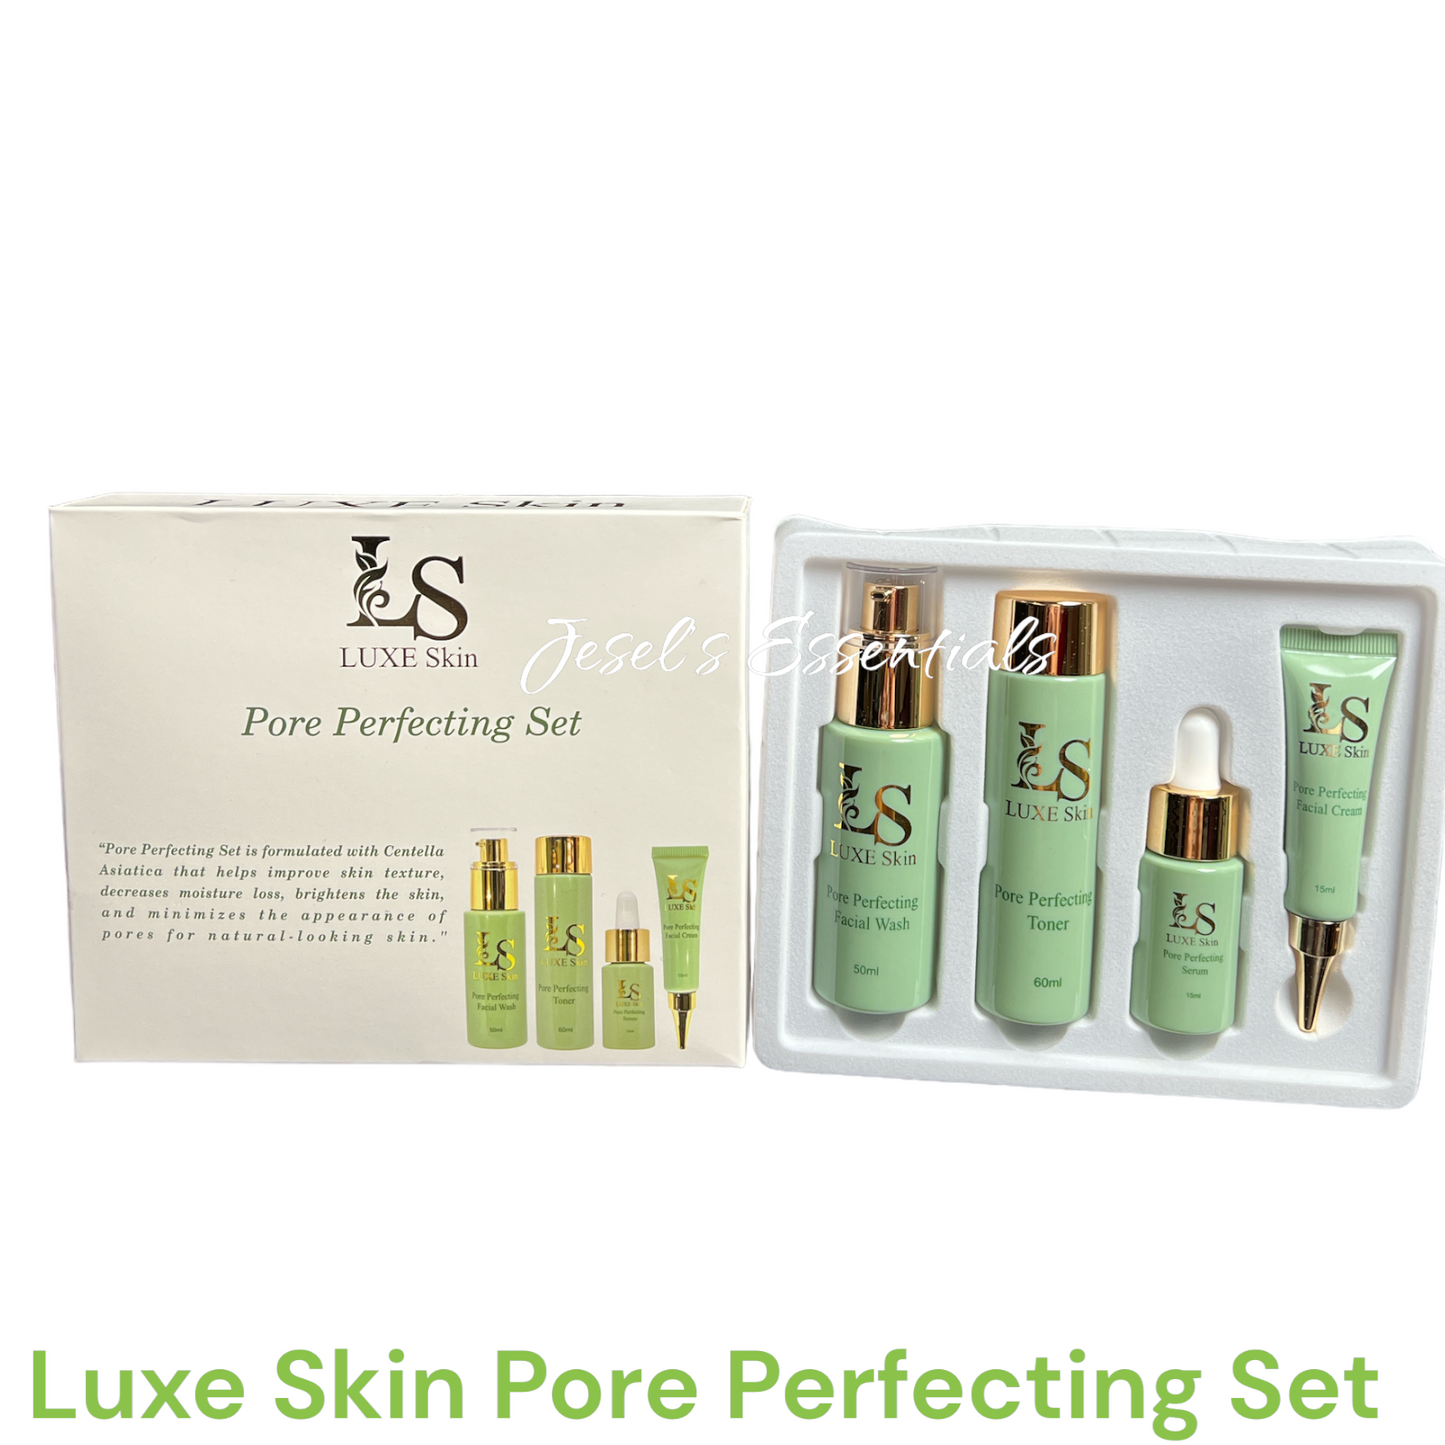 Luxe Skin Pore Perfecting Set